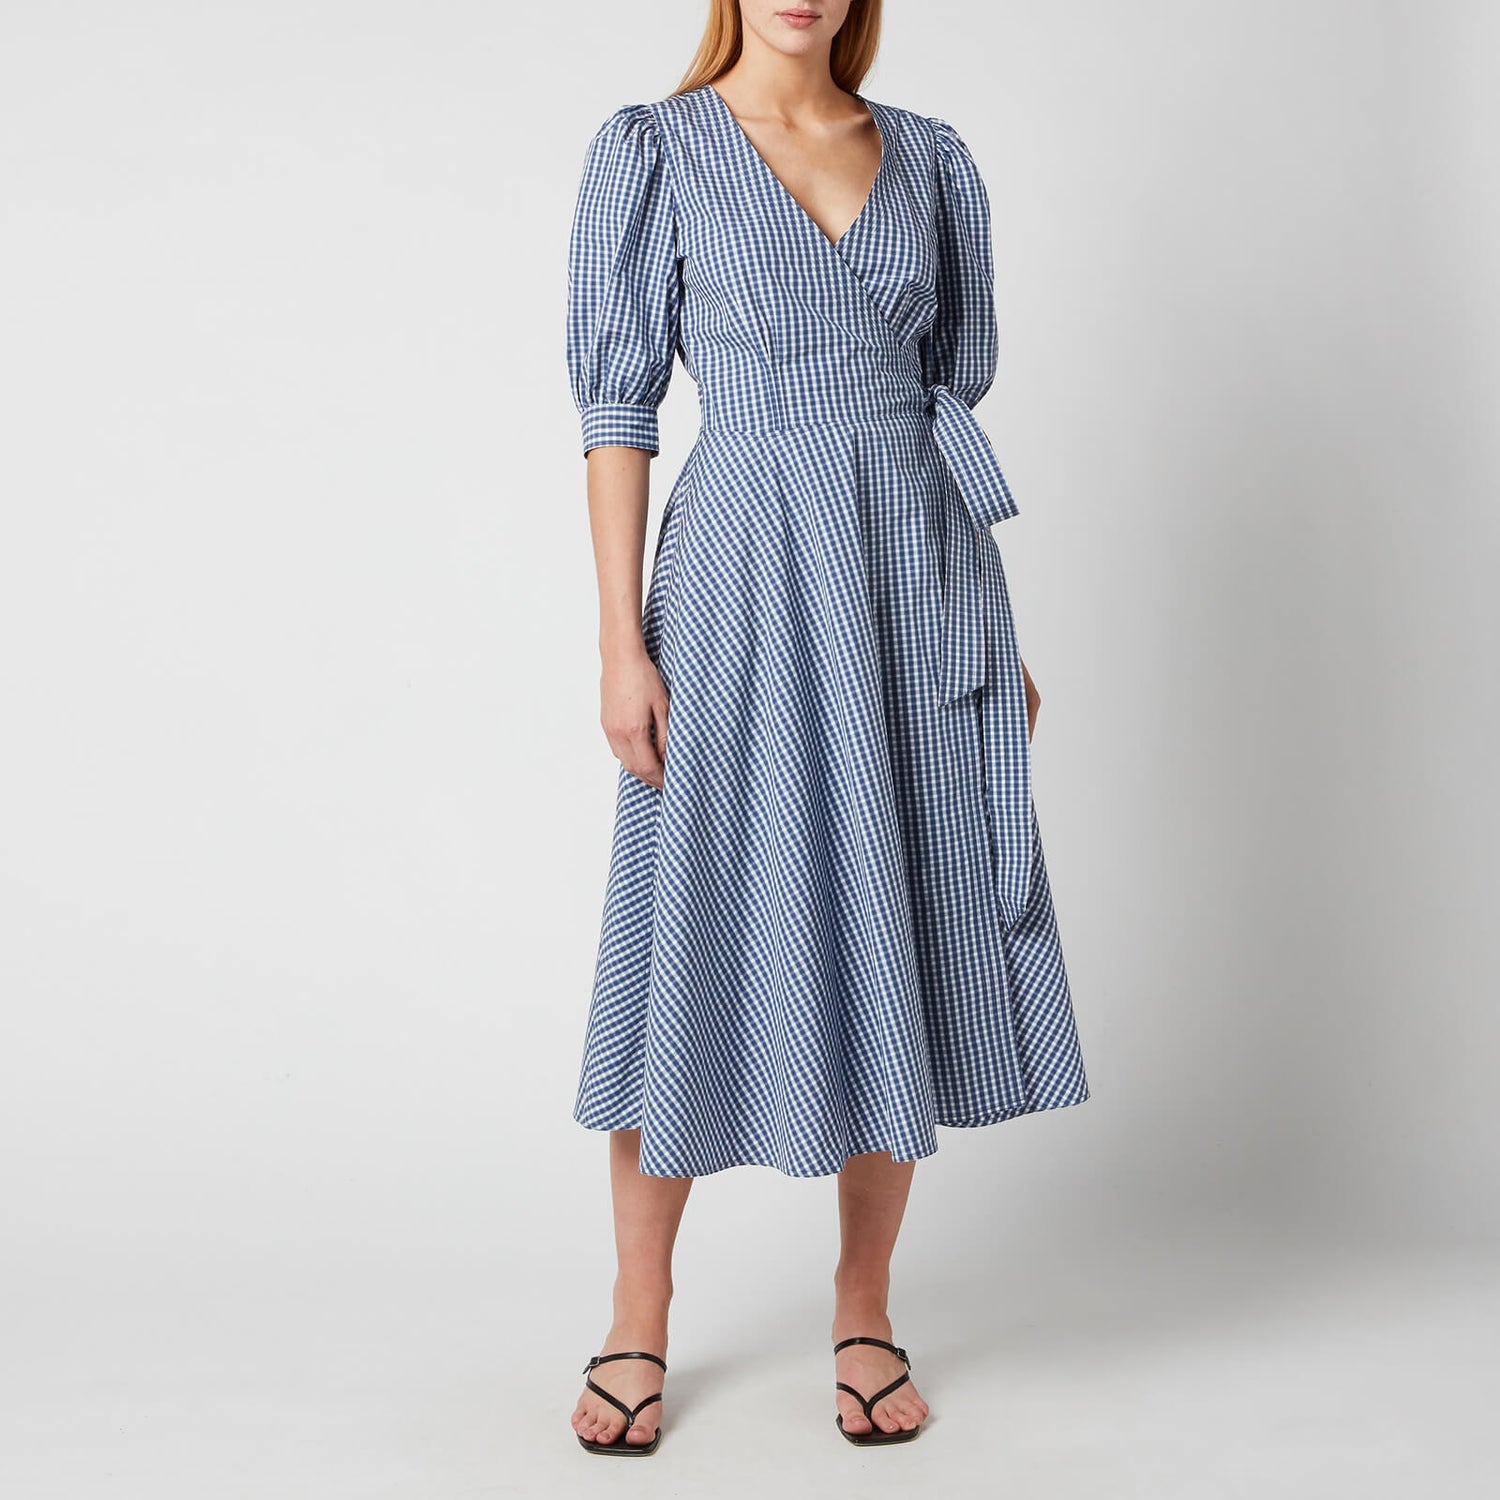 Polo Ralph Lauren Women's Wrap Dress - Blue/White Plaid